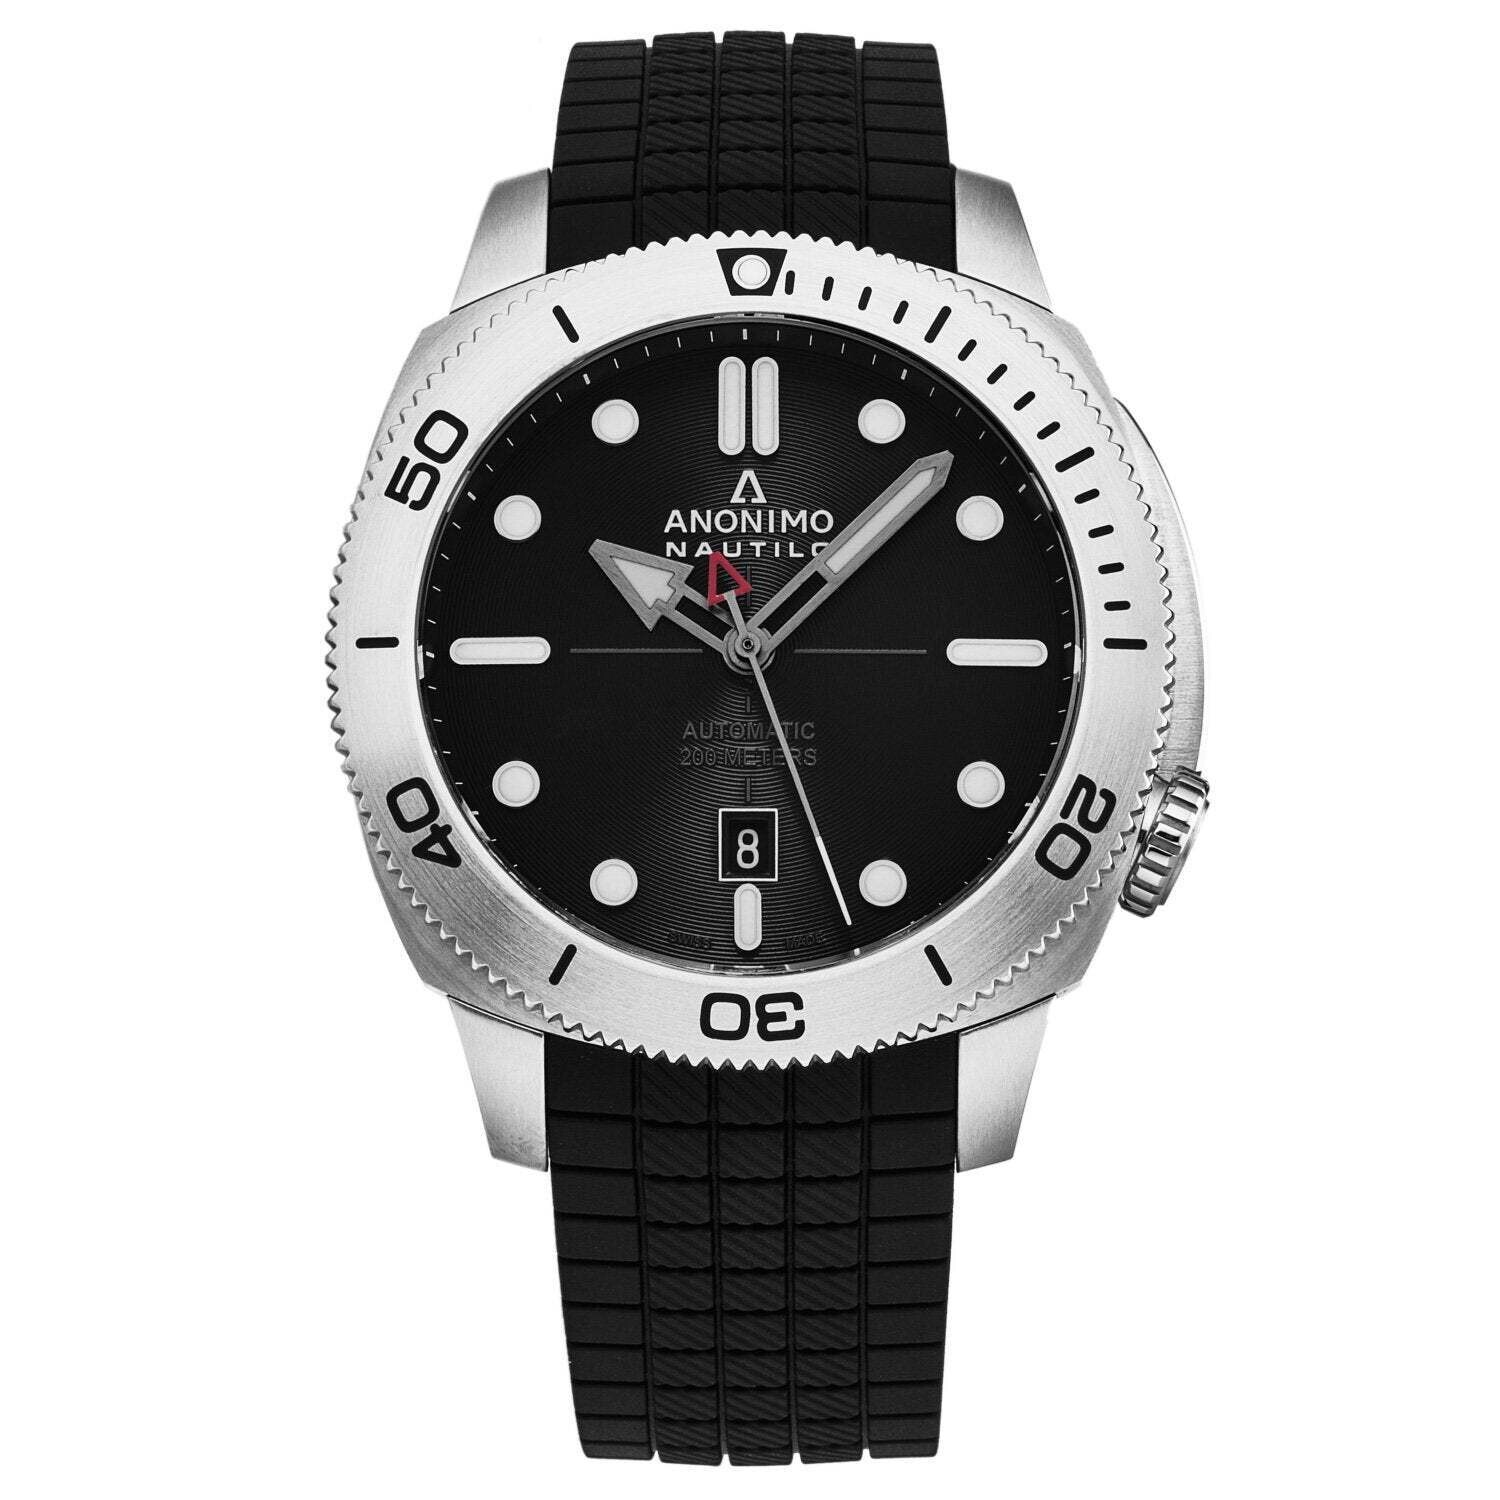 Anonimo Men's AM-1001.01.001.A11 'Nautilo' Black Dial Black Rubber Strap Swiss Automatic Watch